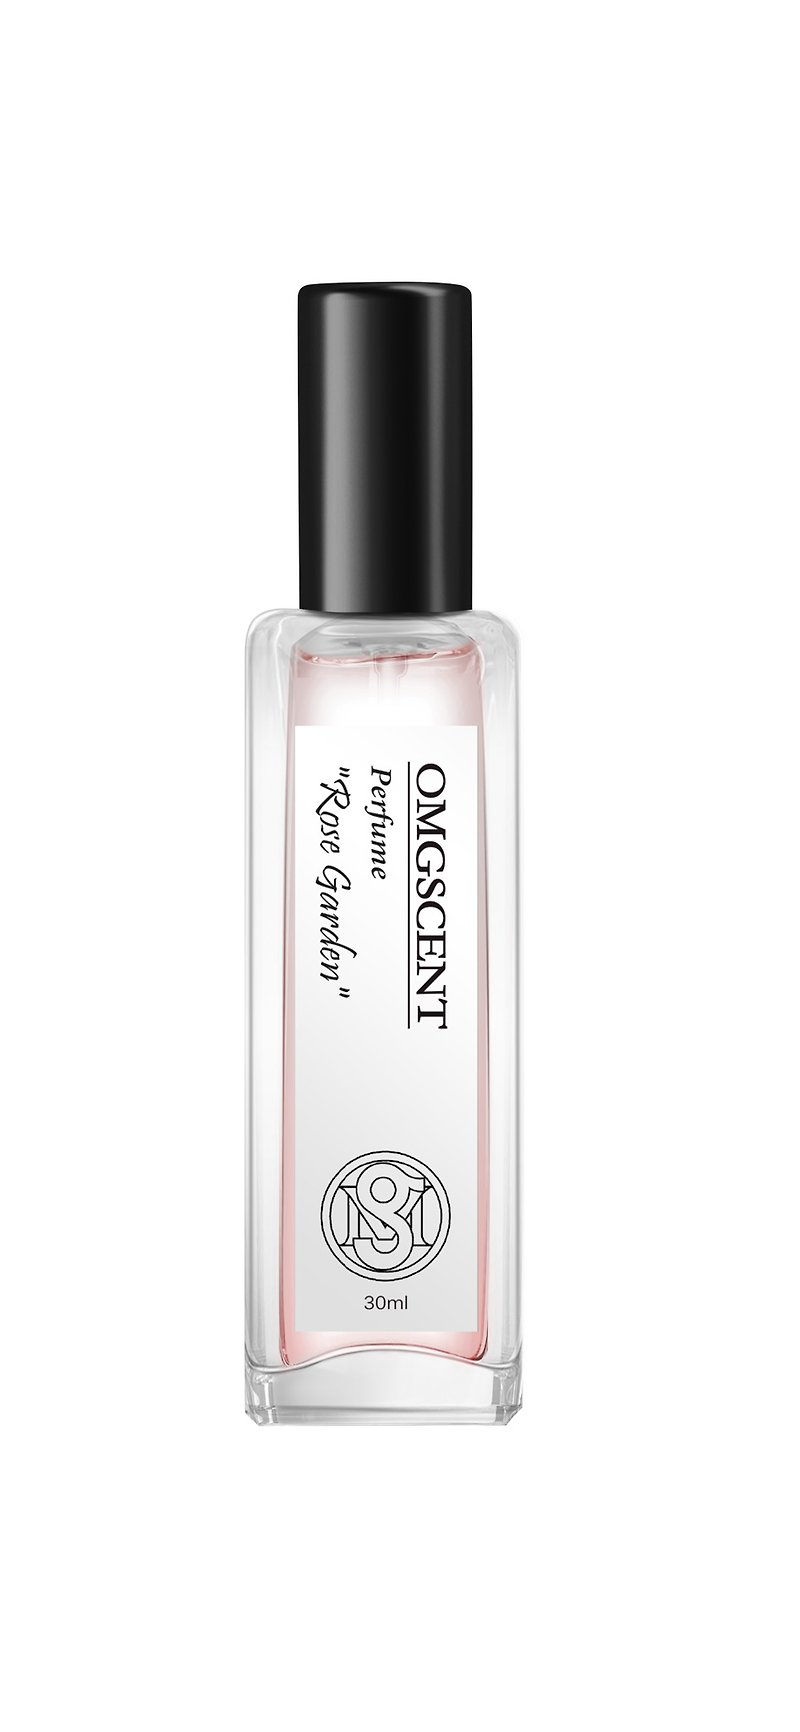 OMG Signature! 30ml Spray Rose Garden - Perfumes & Balms - Other Materials 